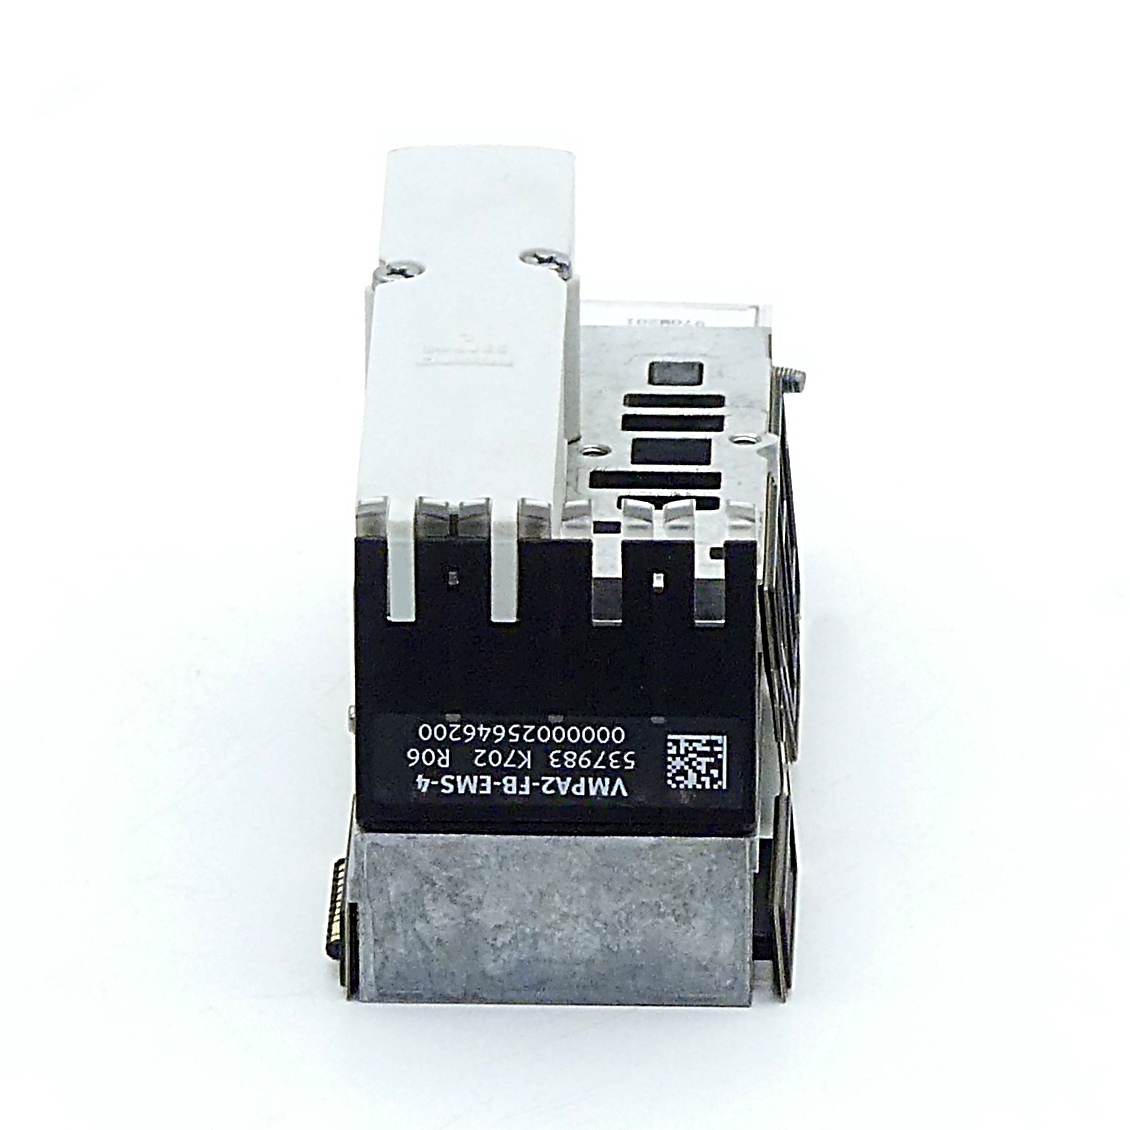 Electronic Module VMPA2-FB-EMS-4 + 538000 